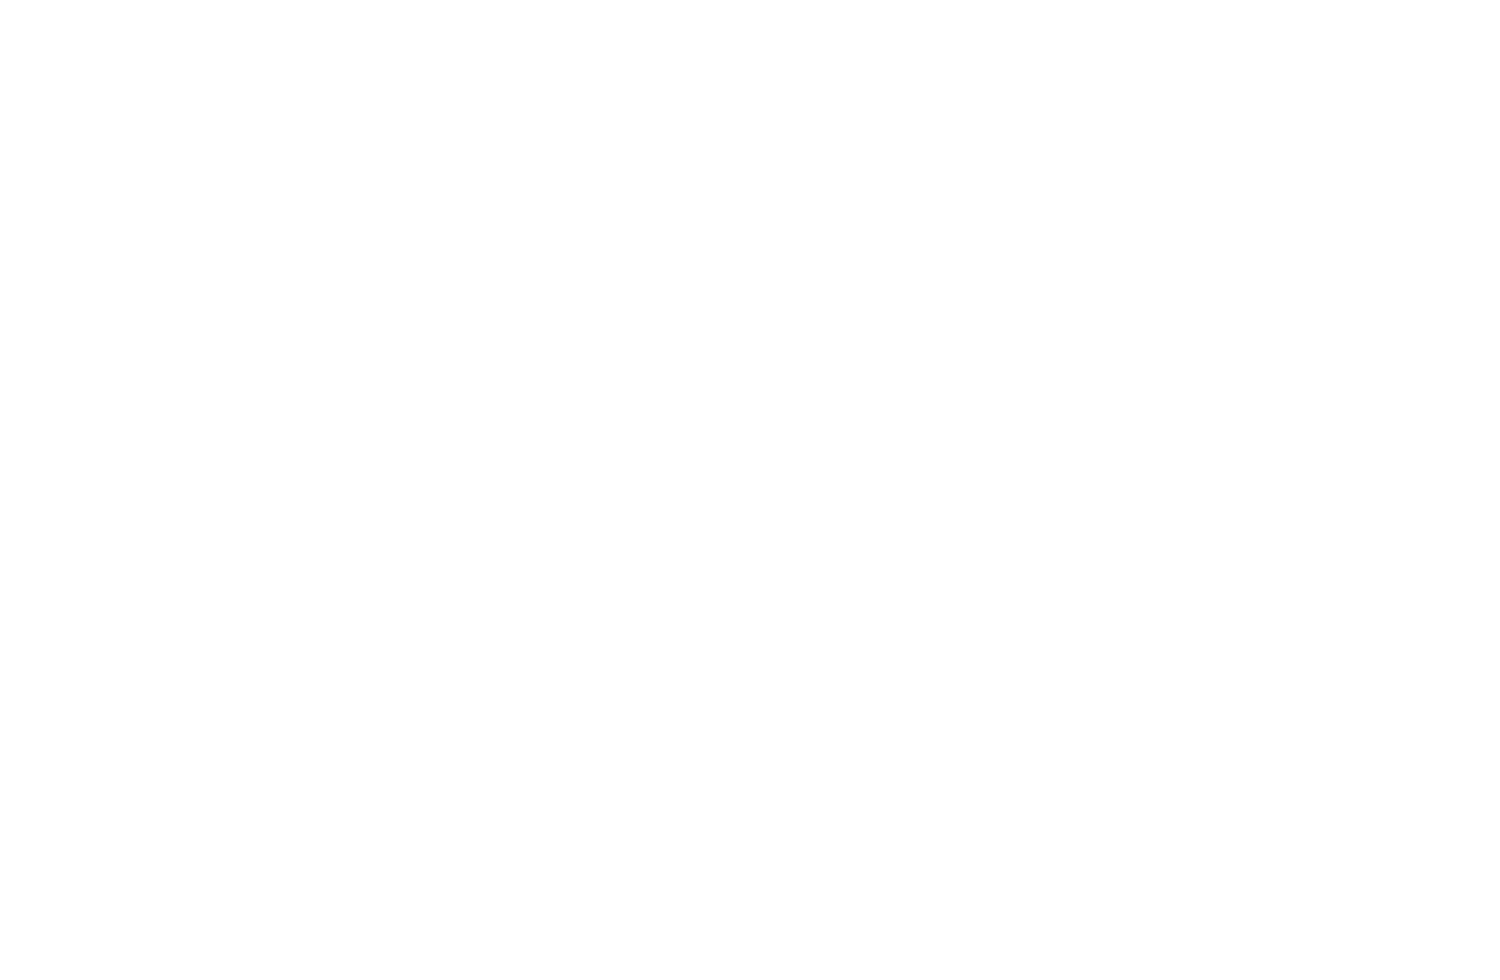 Charline Moreau Photography